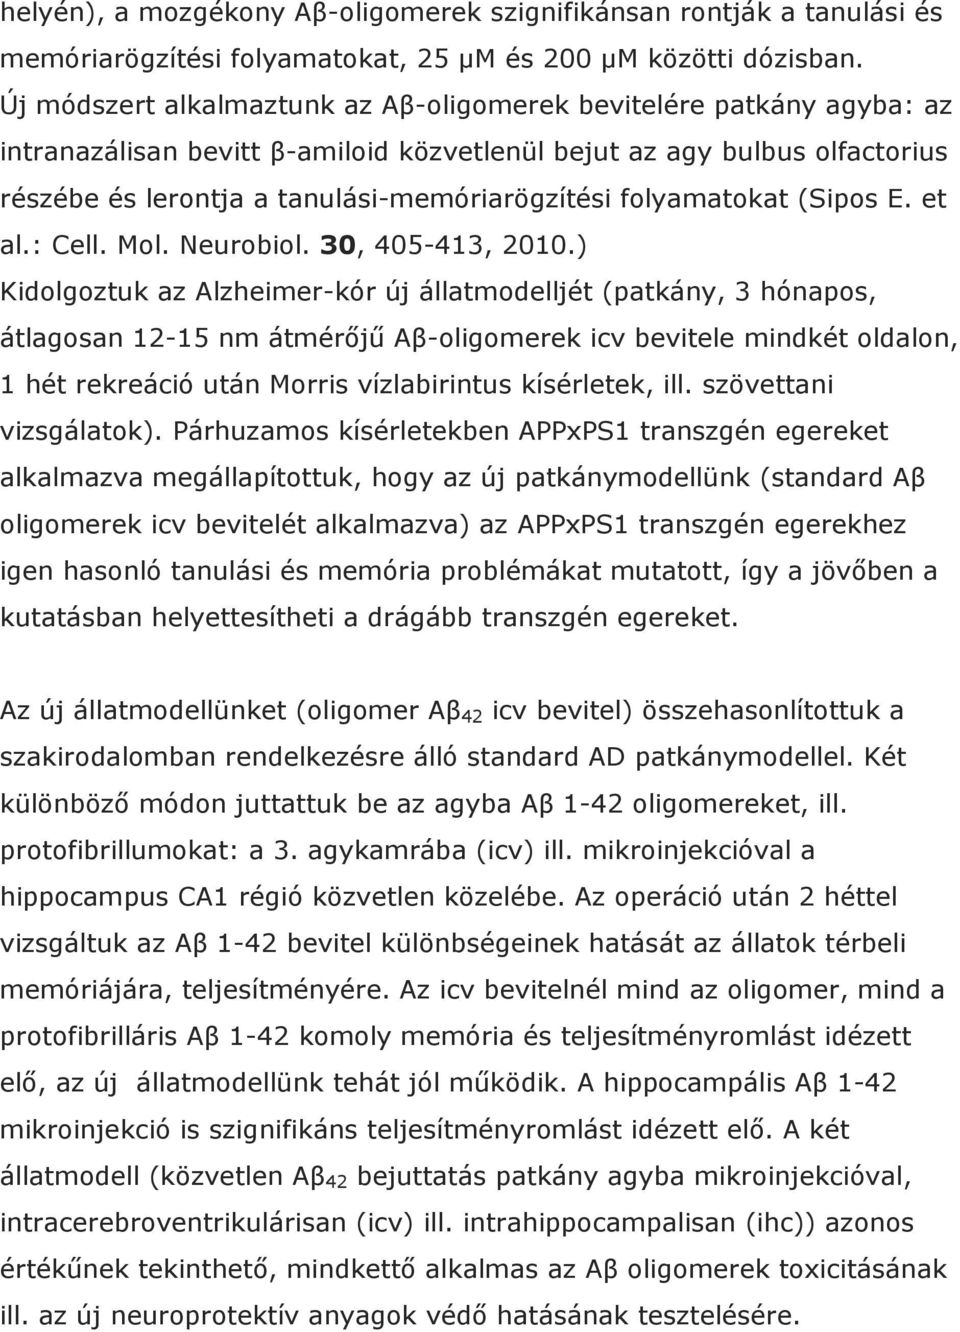 folyamatokat (Sipos E. et al.: Cell. Mol. Neurobiol. 30, 405-413, 2010.